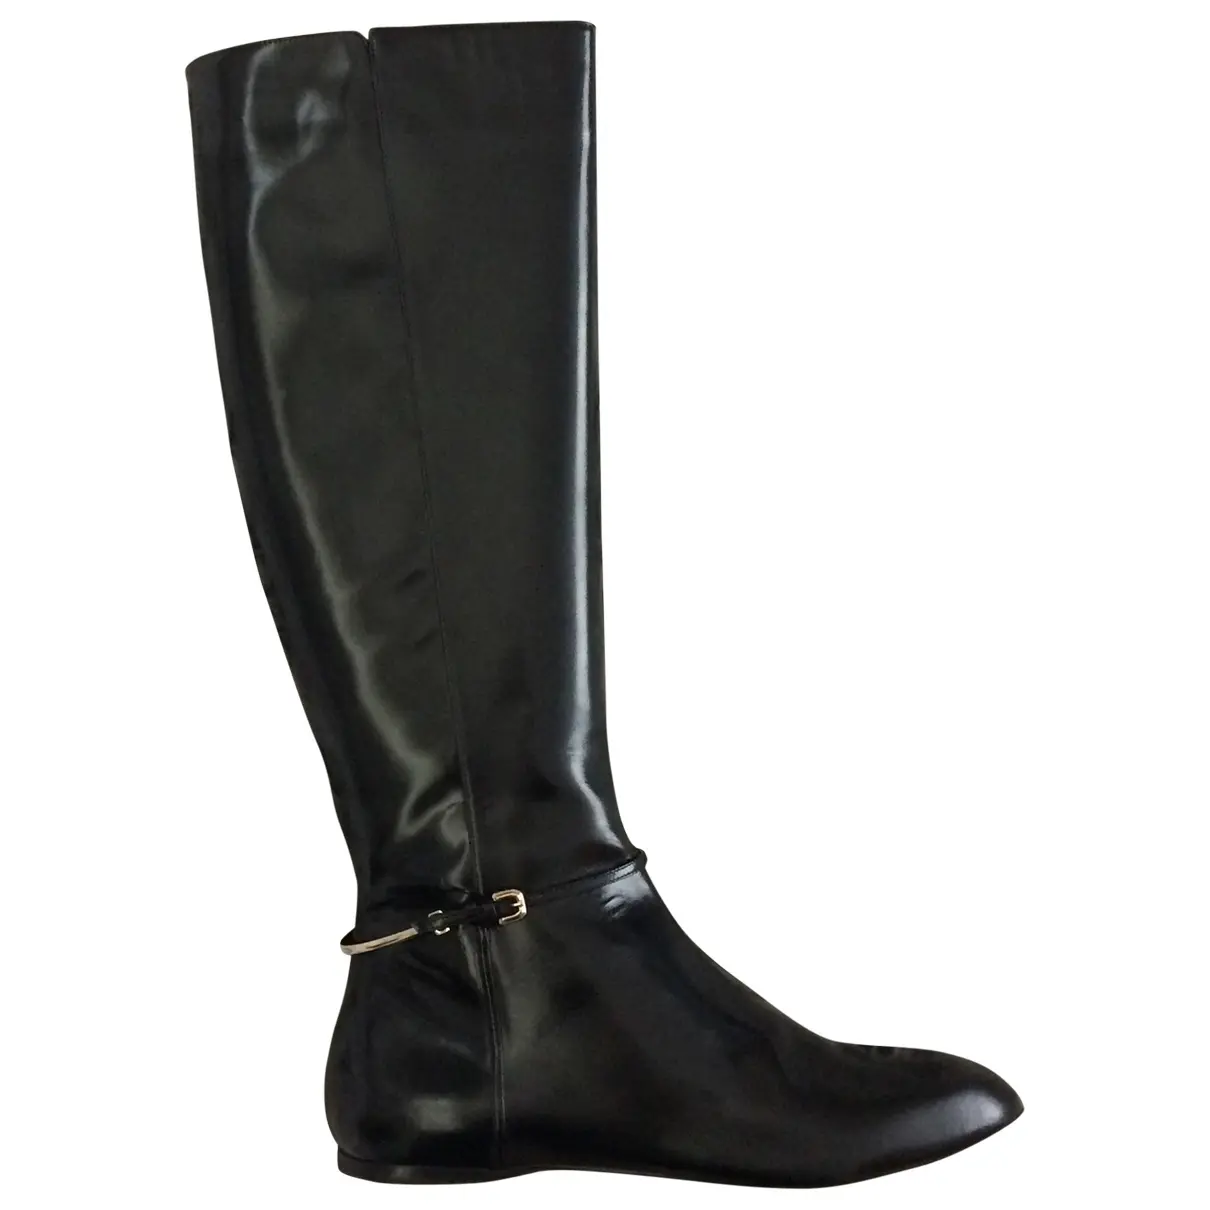 Patent leather riding boots Nina Ricci